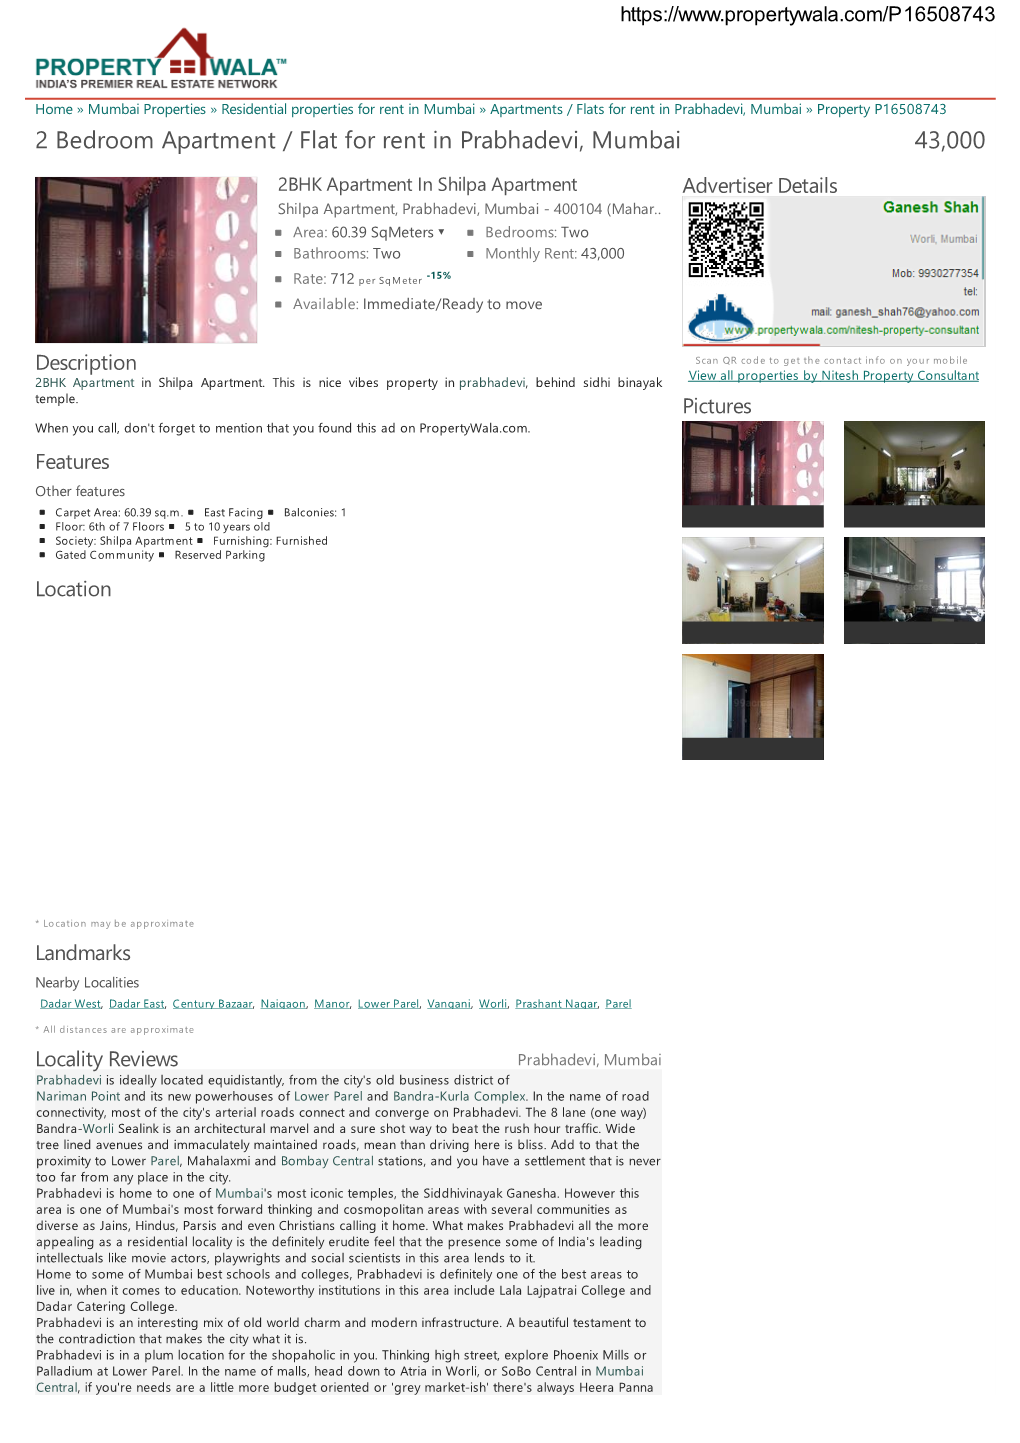 2 Bedroom Apartment / Flat for Rent in Prabhadevi, Mumbai (P16508743